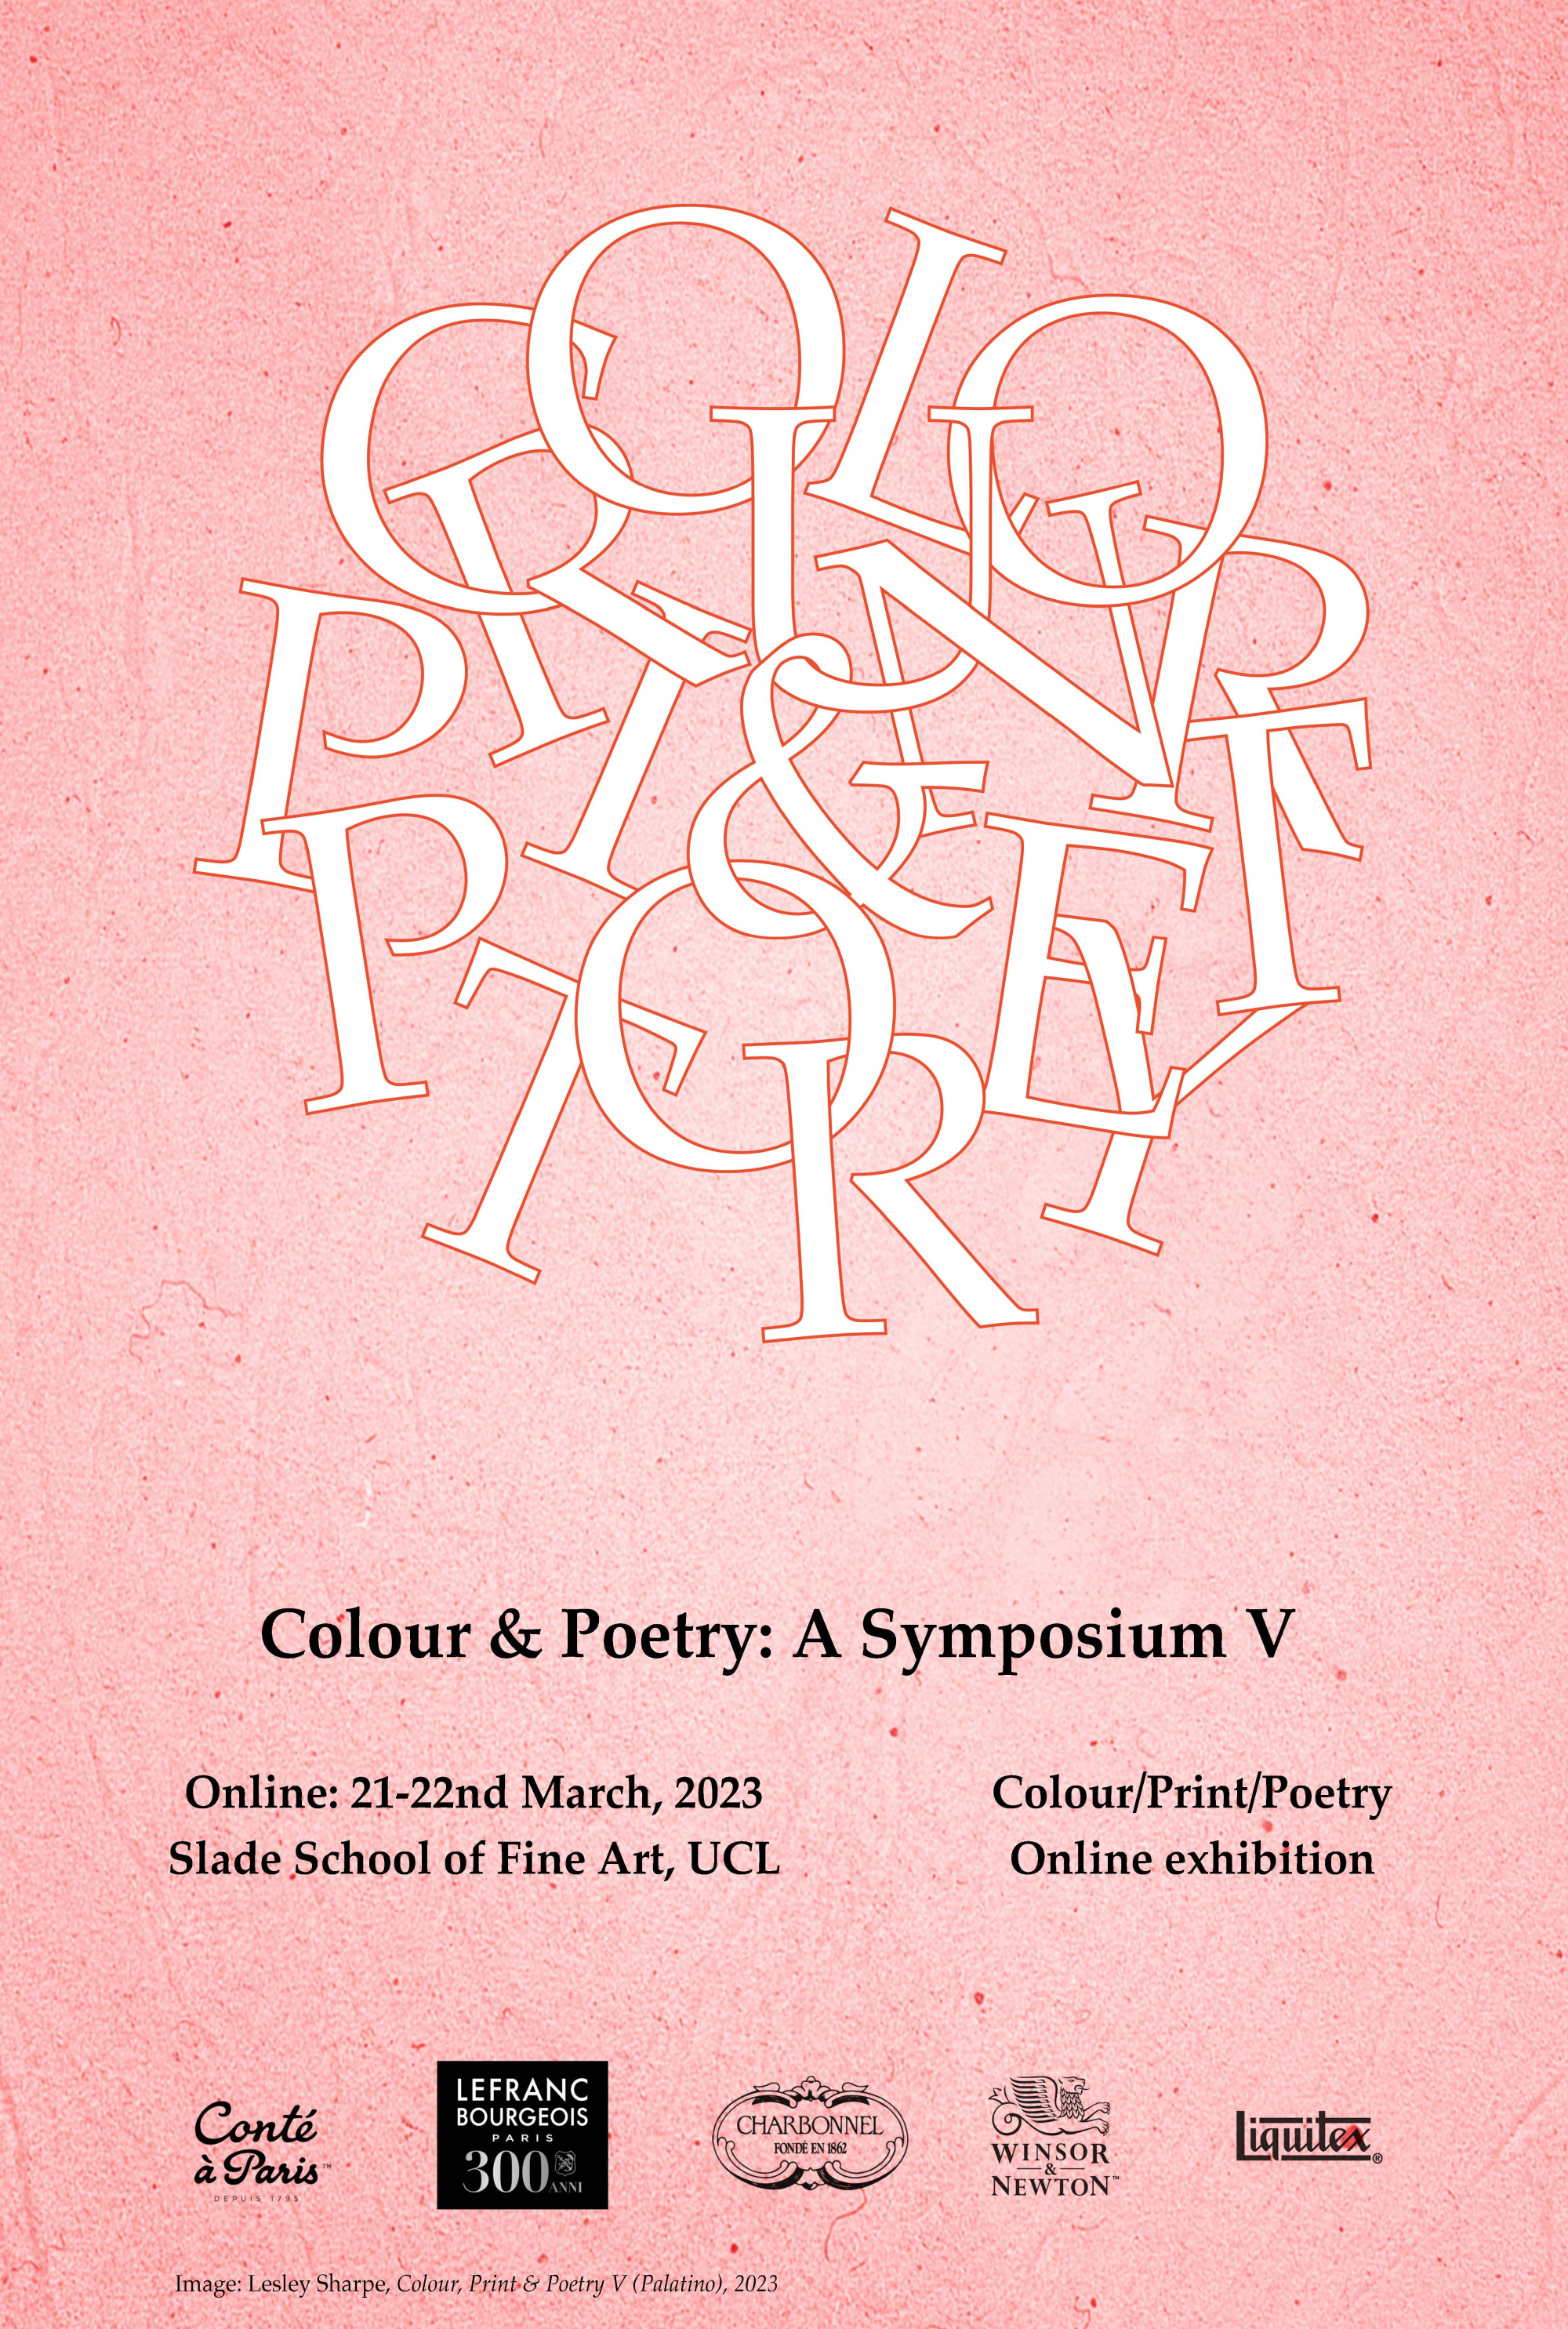 Colour, Print & Poetry V (Palatino)